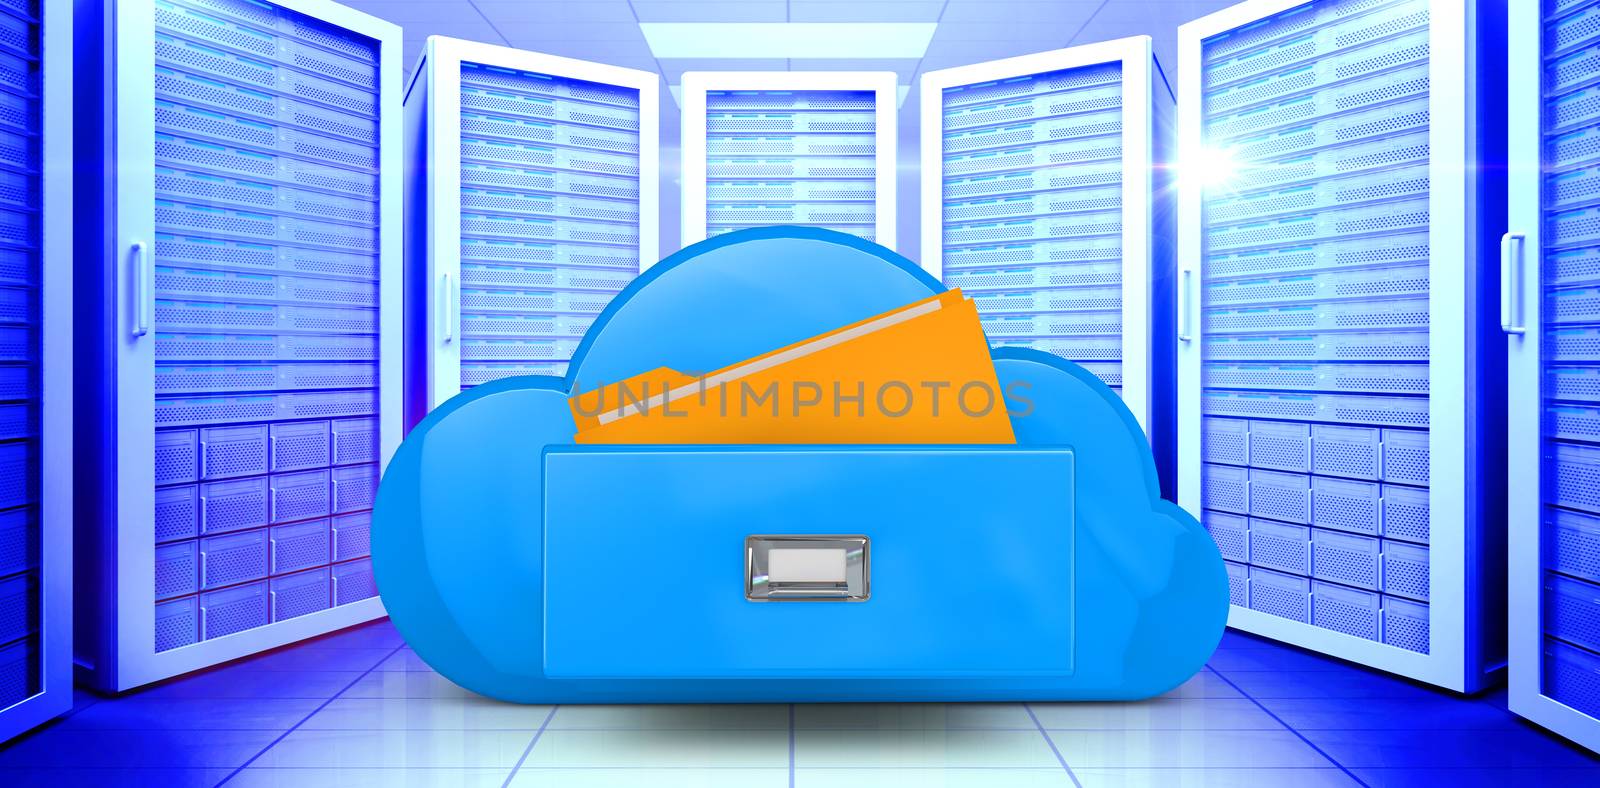 Cloud computing drawer against server room